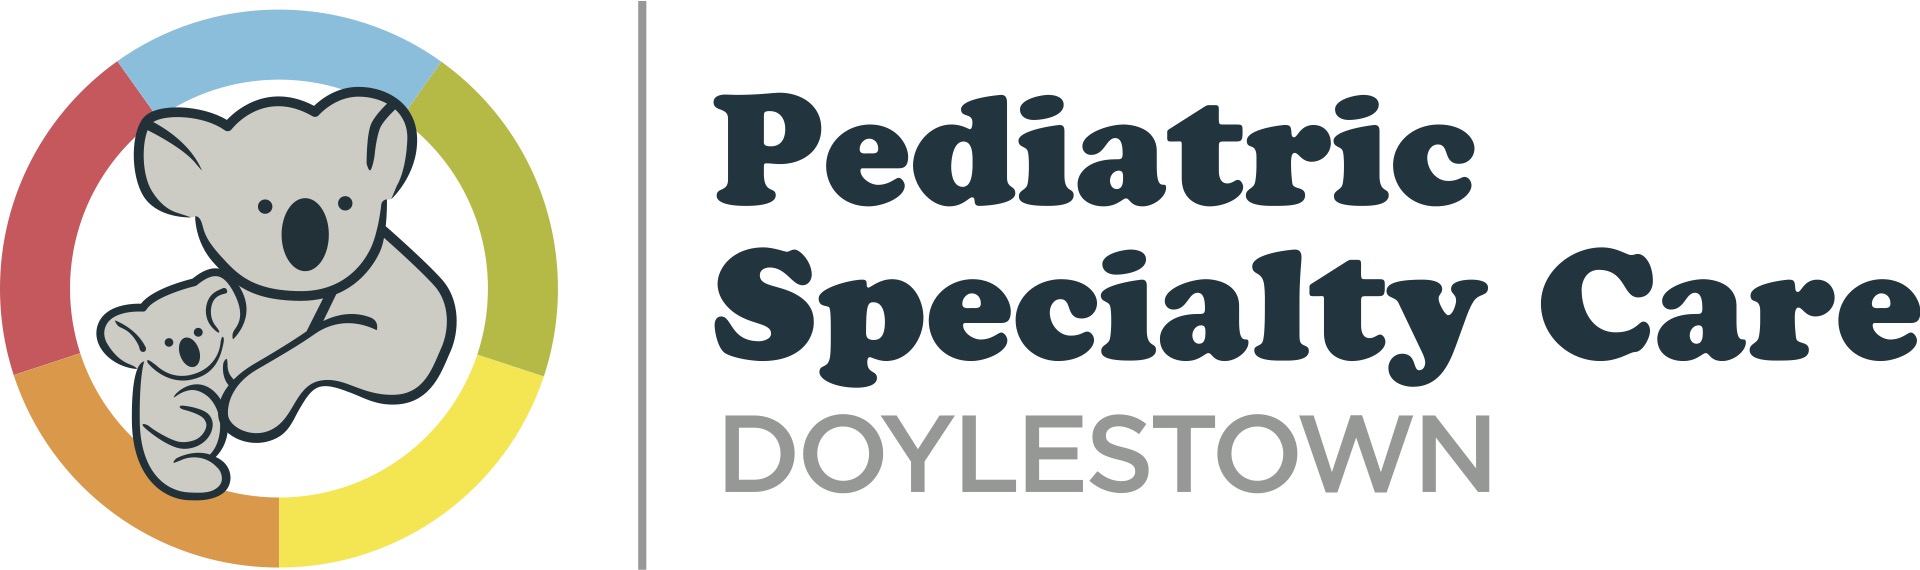 Doylestown, PA  - Pediatric Specialty Care | Location logo